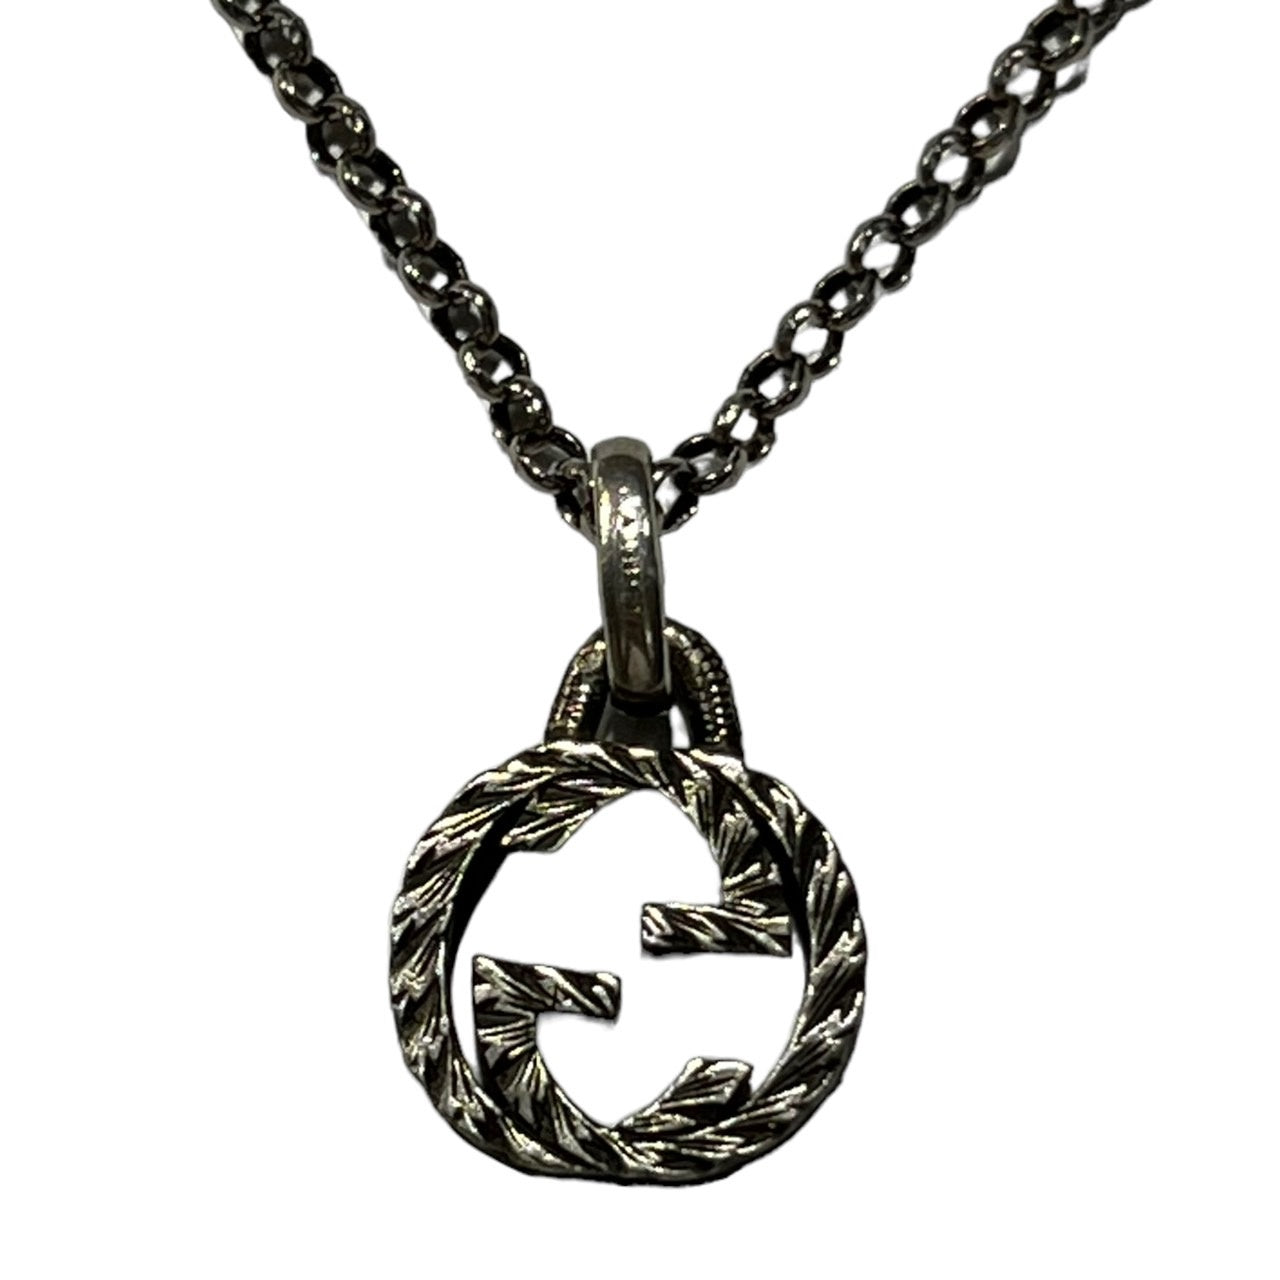 GUCCI(グッチ) interlocking G necklace インターロッキング G チェーン ネックレス silver 925 シルバー ロゴ ペンダント